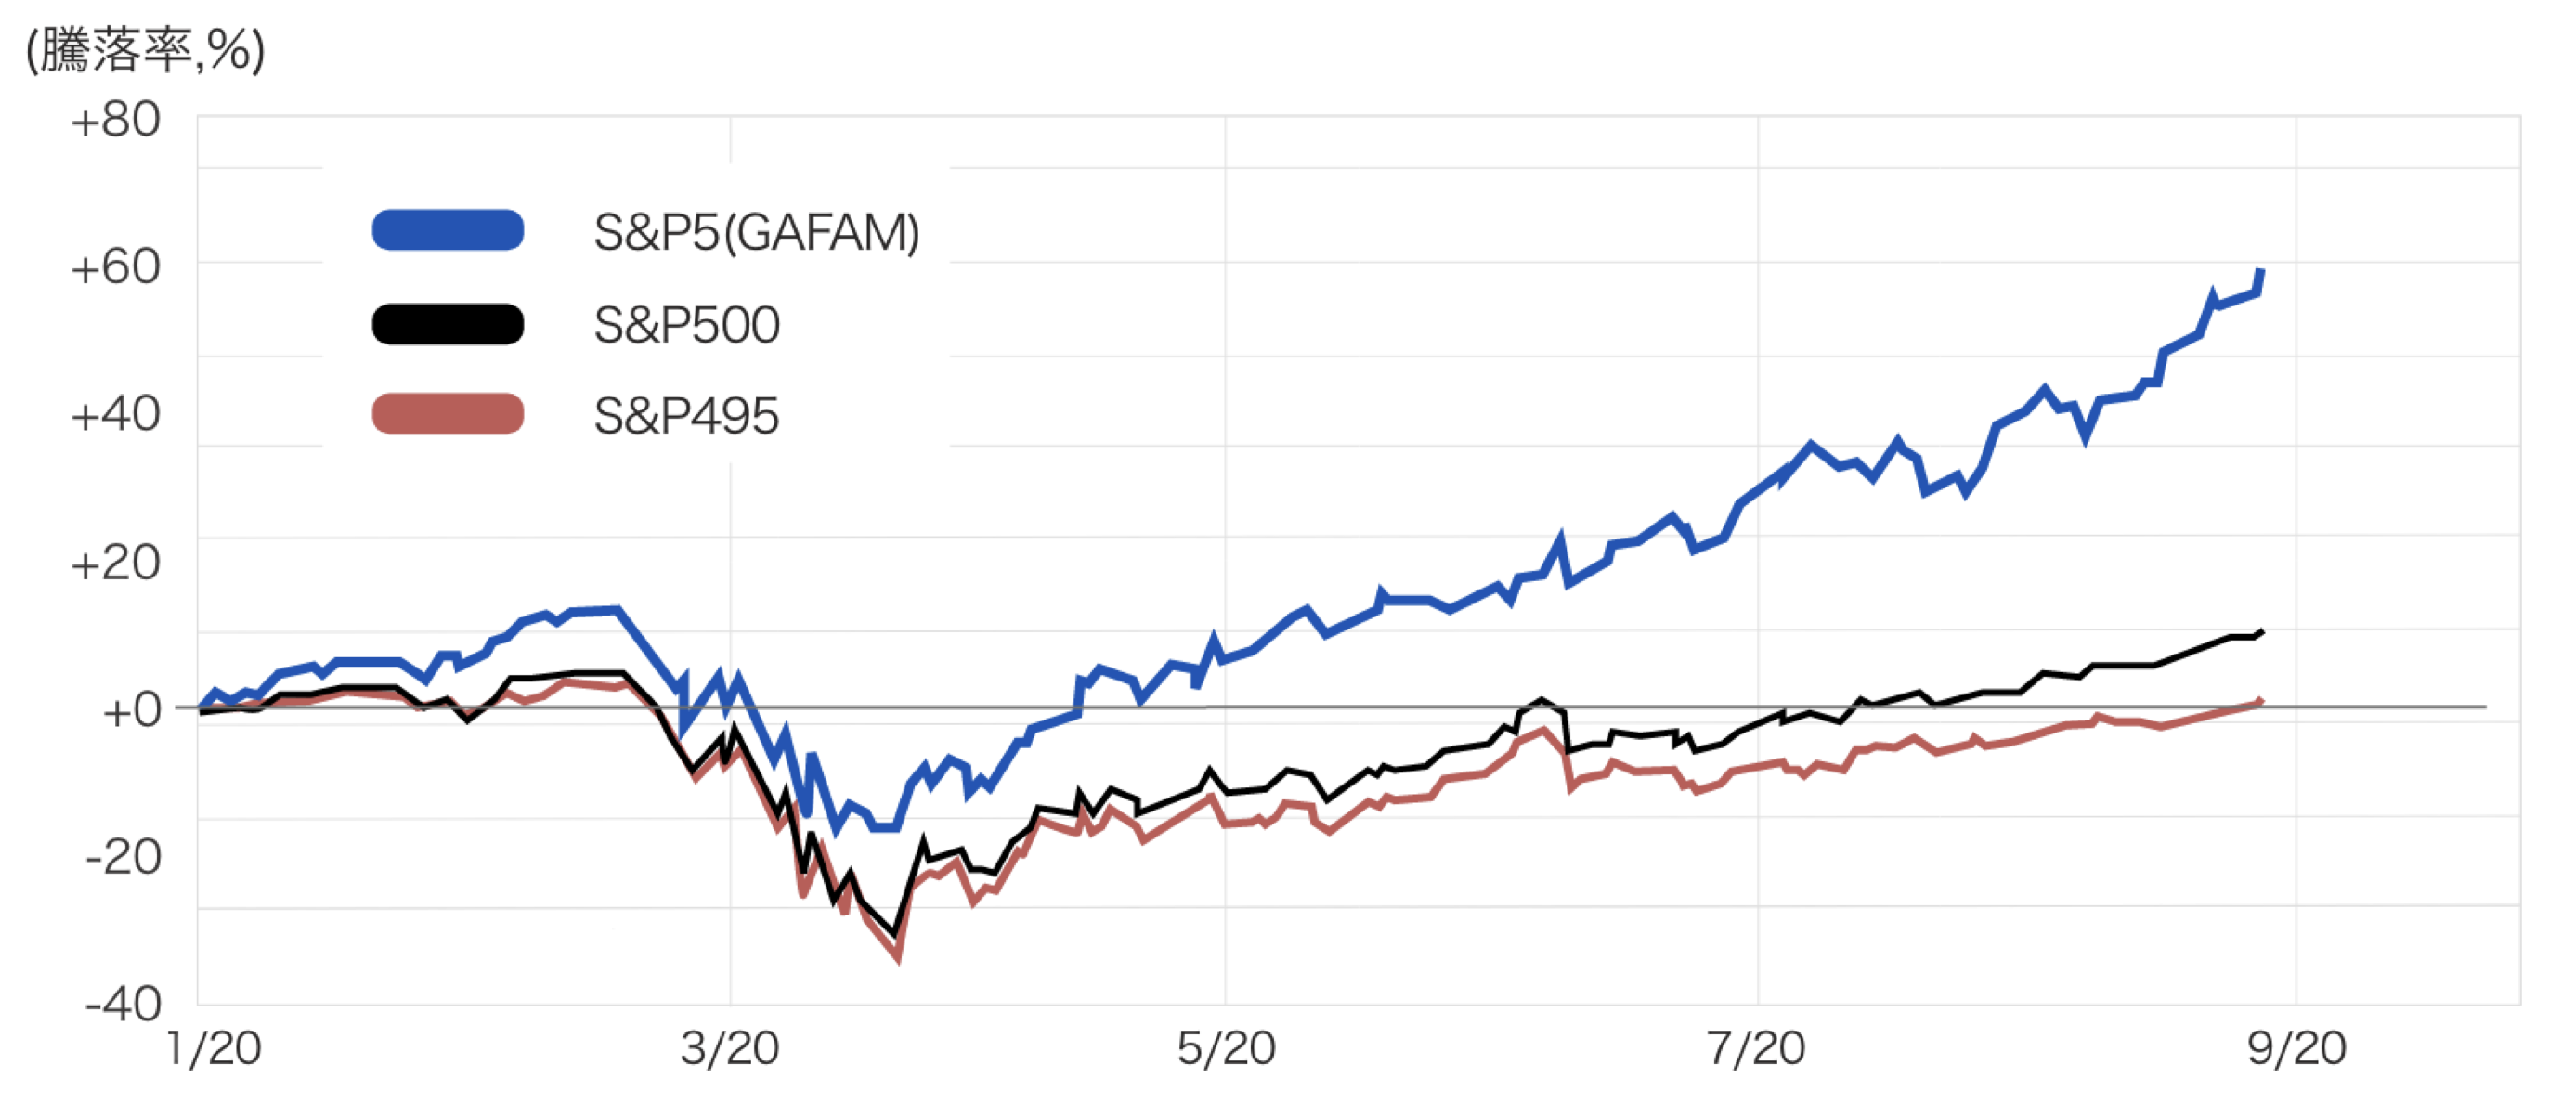 S&P500とS&P495のリターンの差